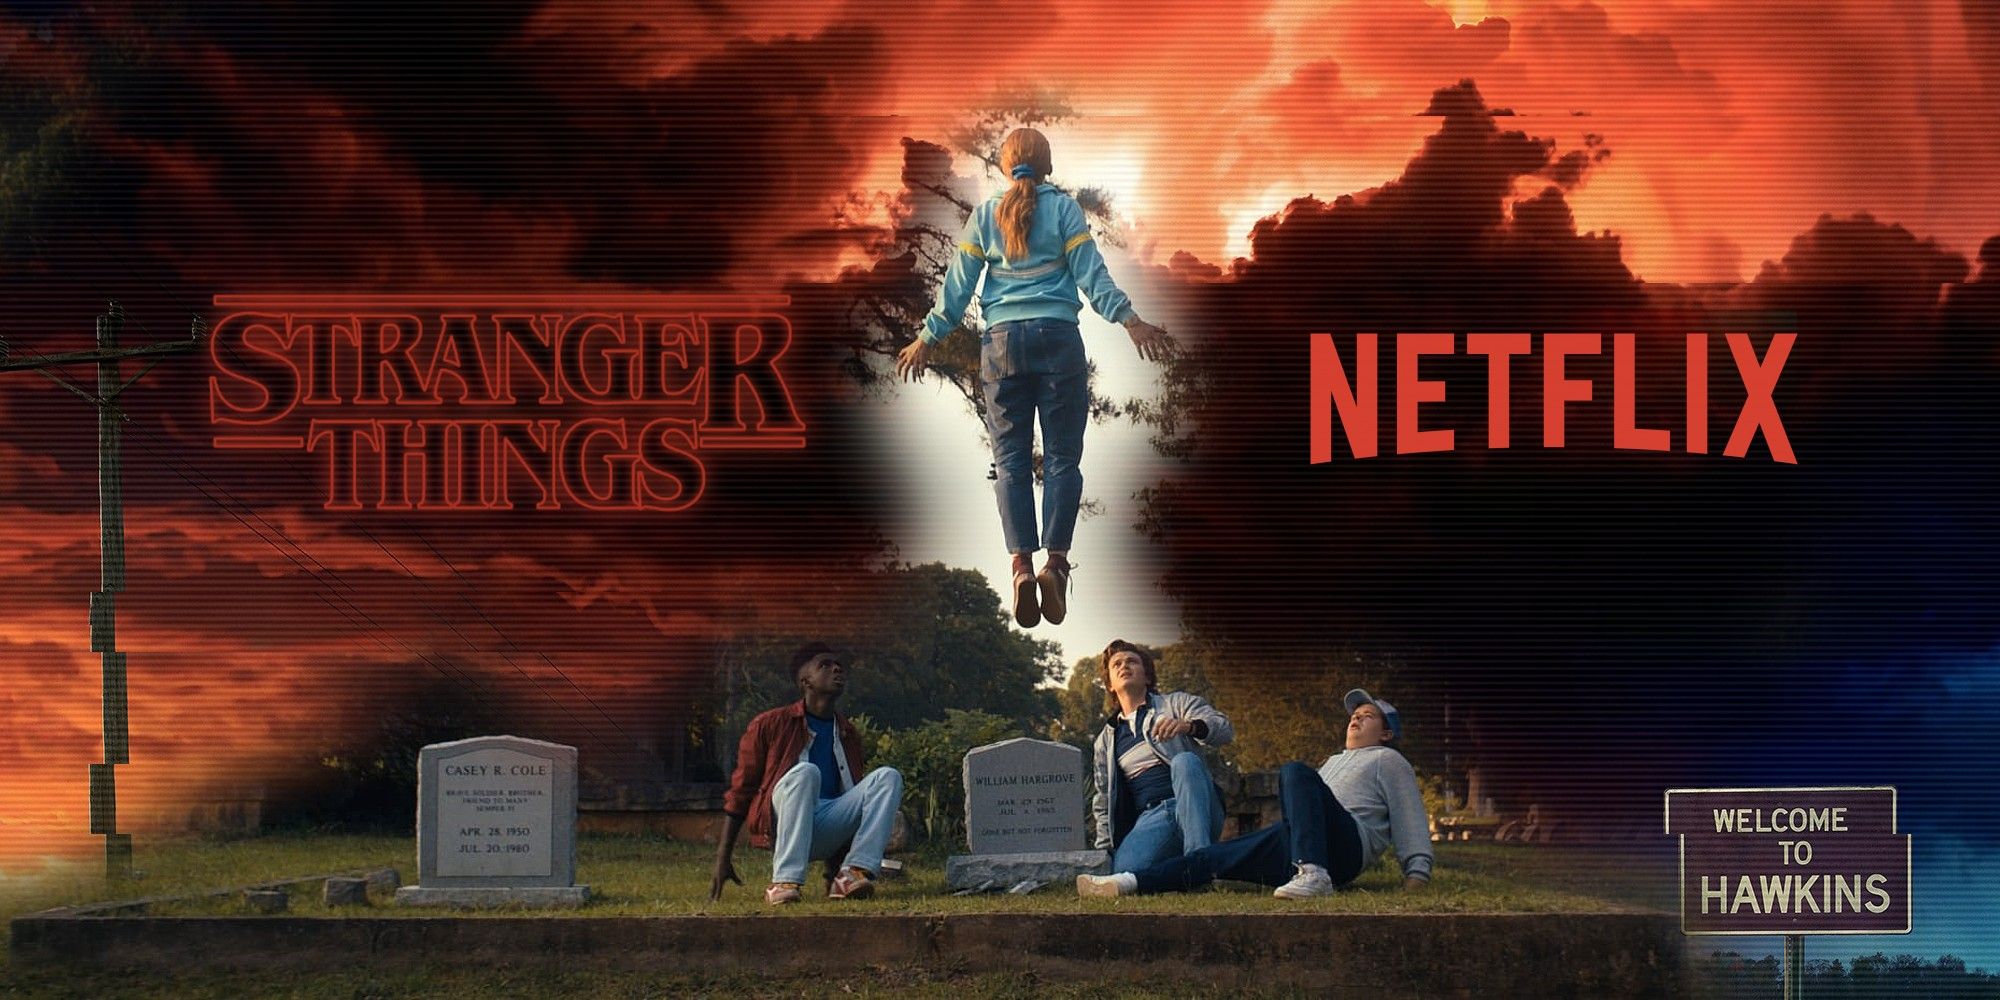 Stranger Things, Vol. 1 (A Netflix Original Series Soundtrack) - Album by  Kyle Dixon & Michael Stein - Apple Music